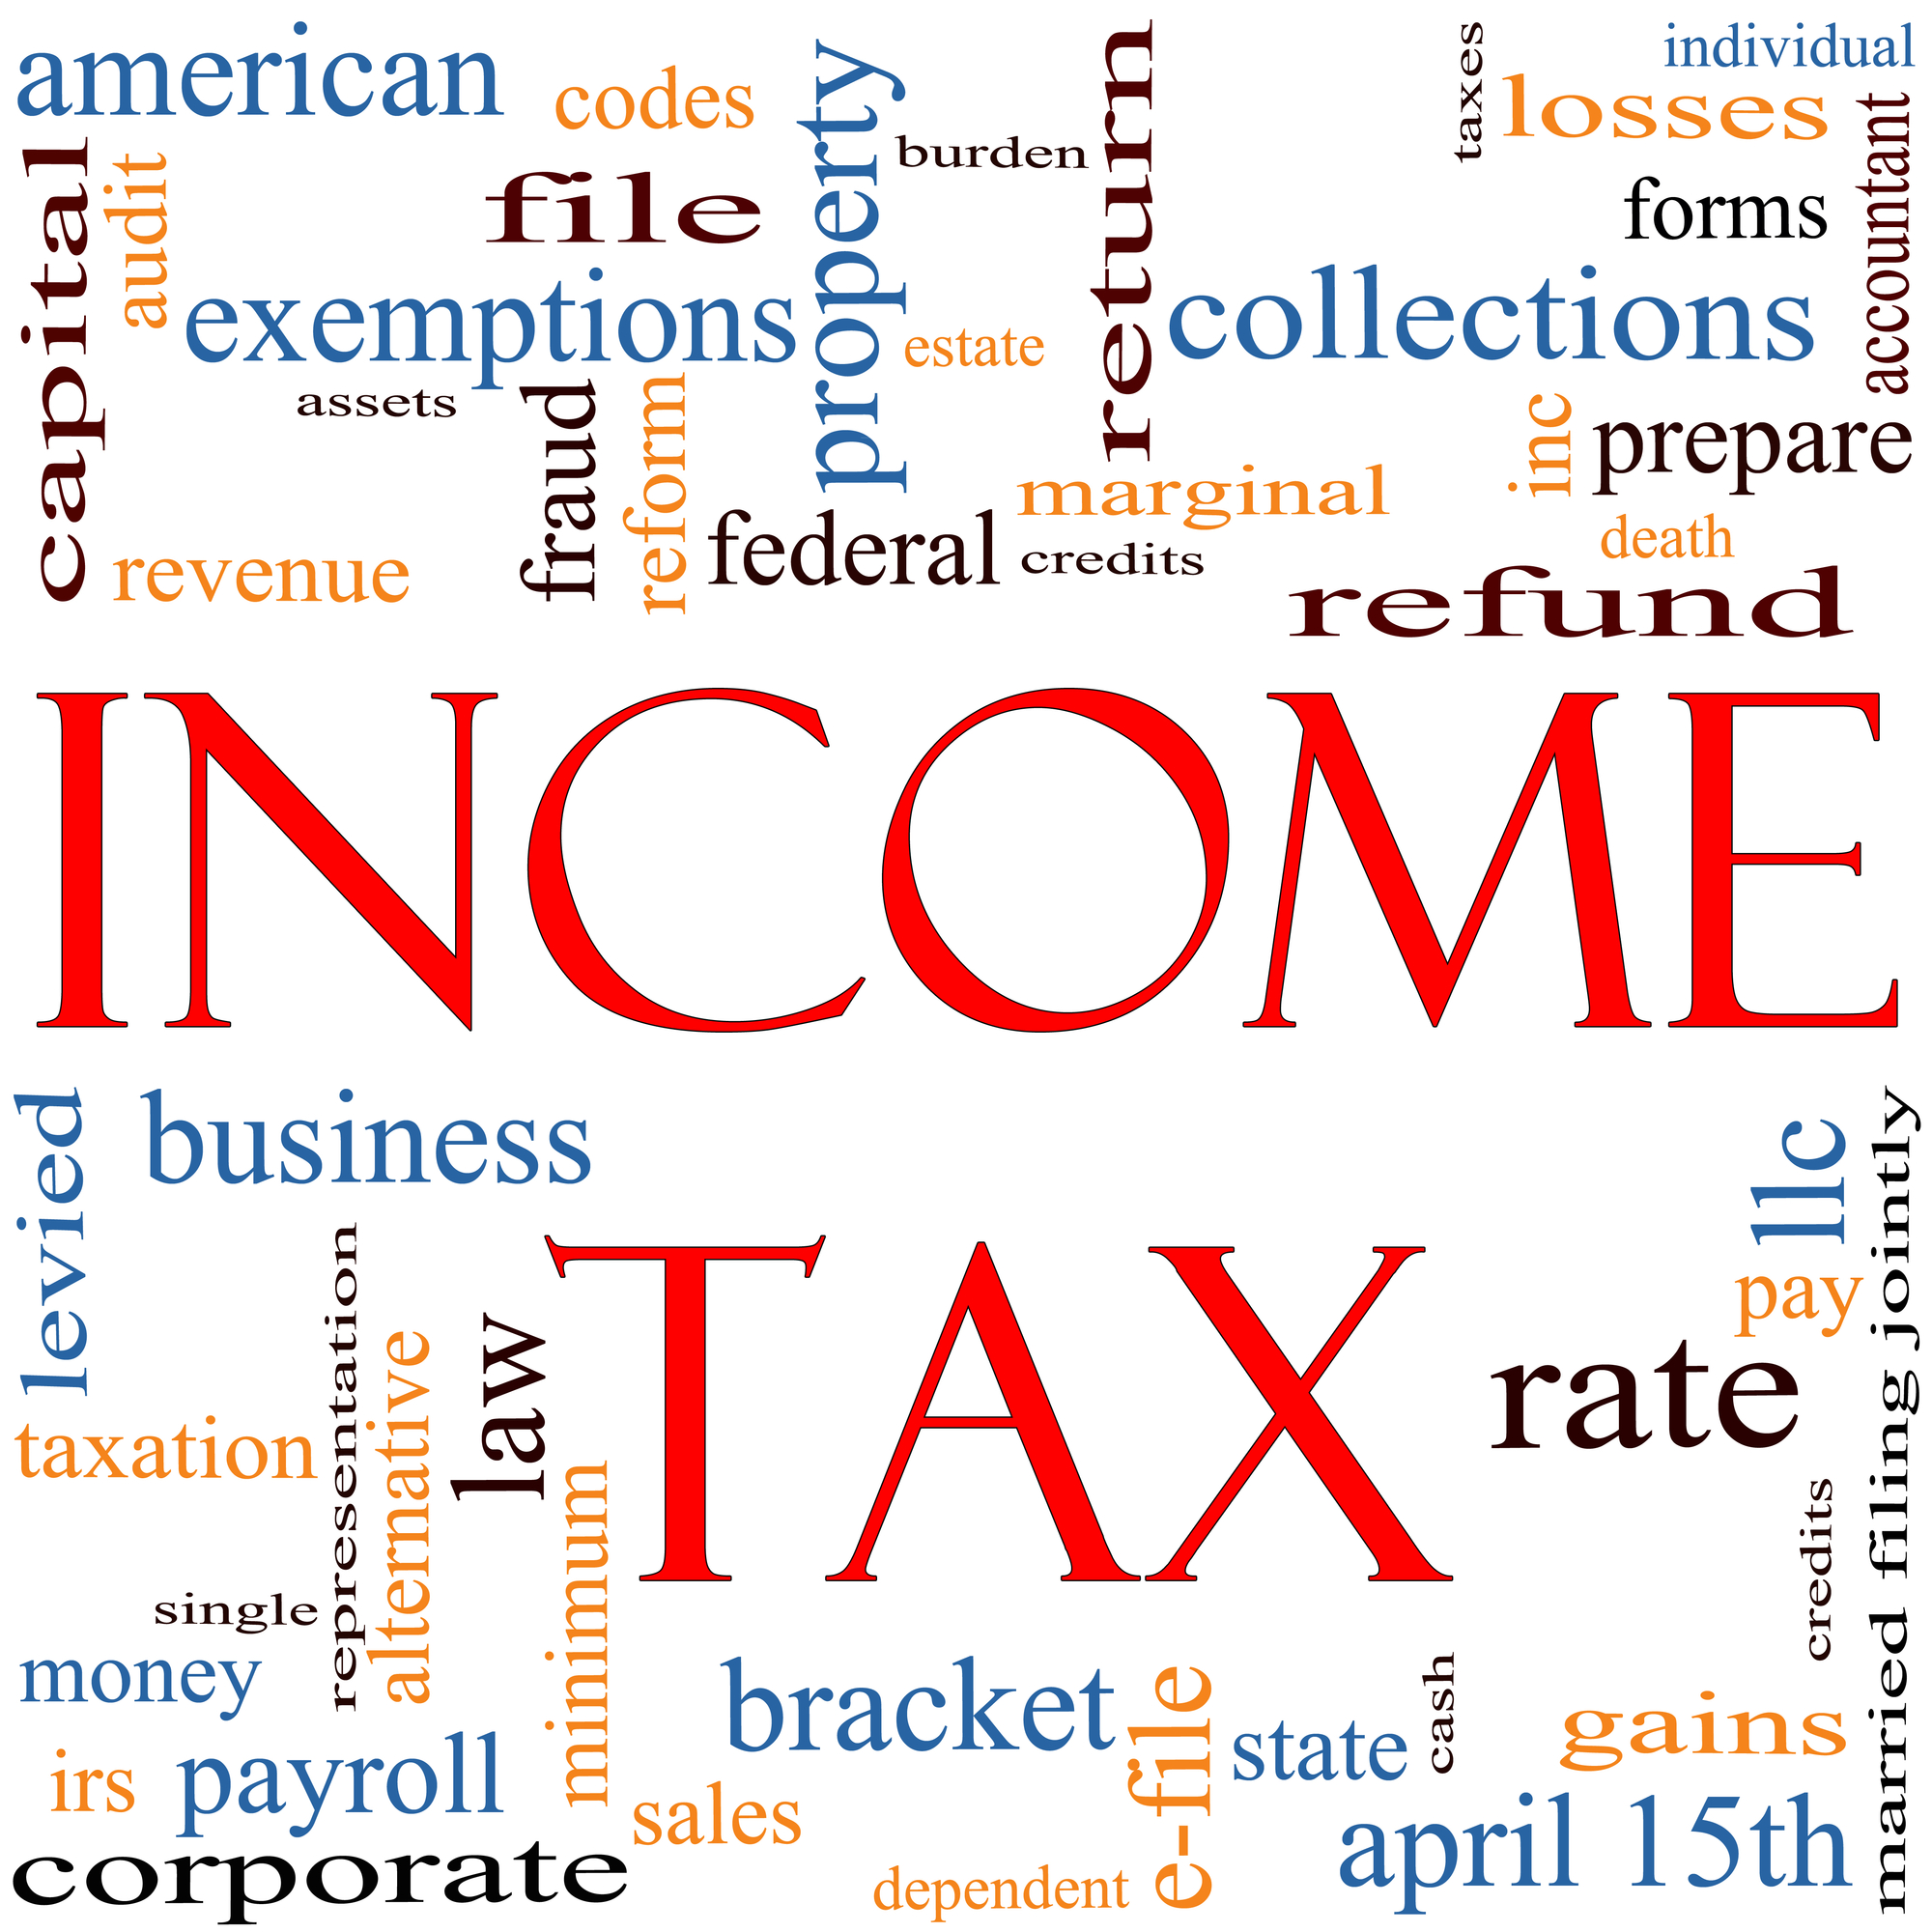 How are LLCs Taxed?